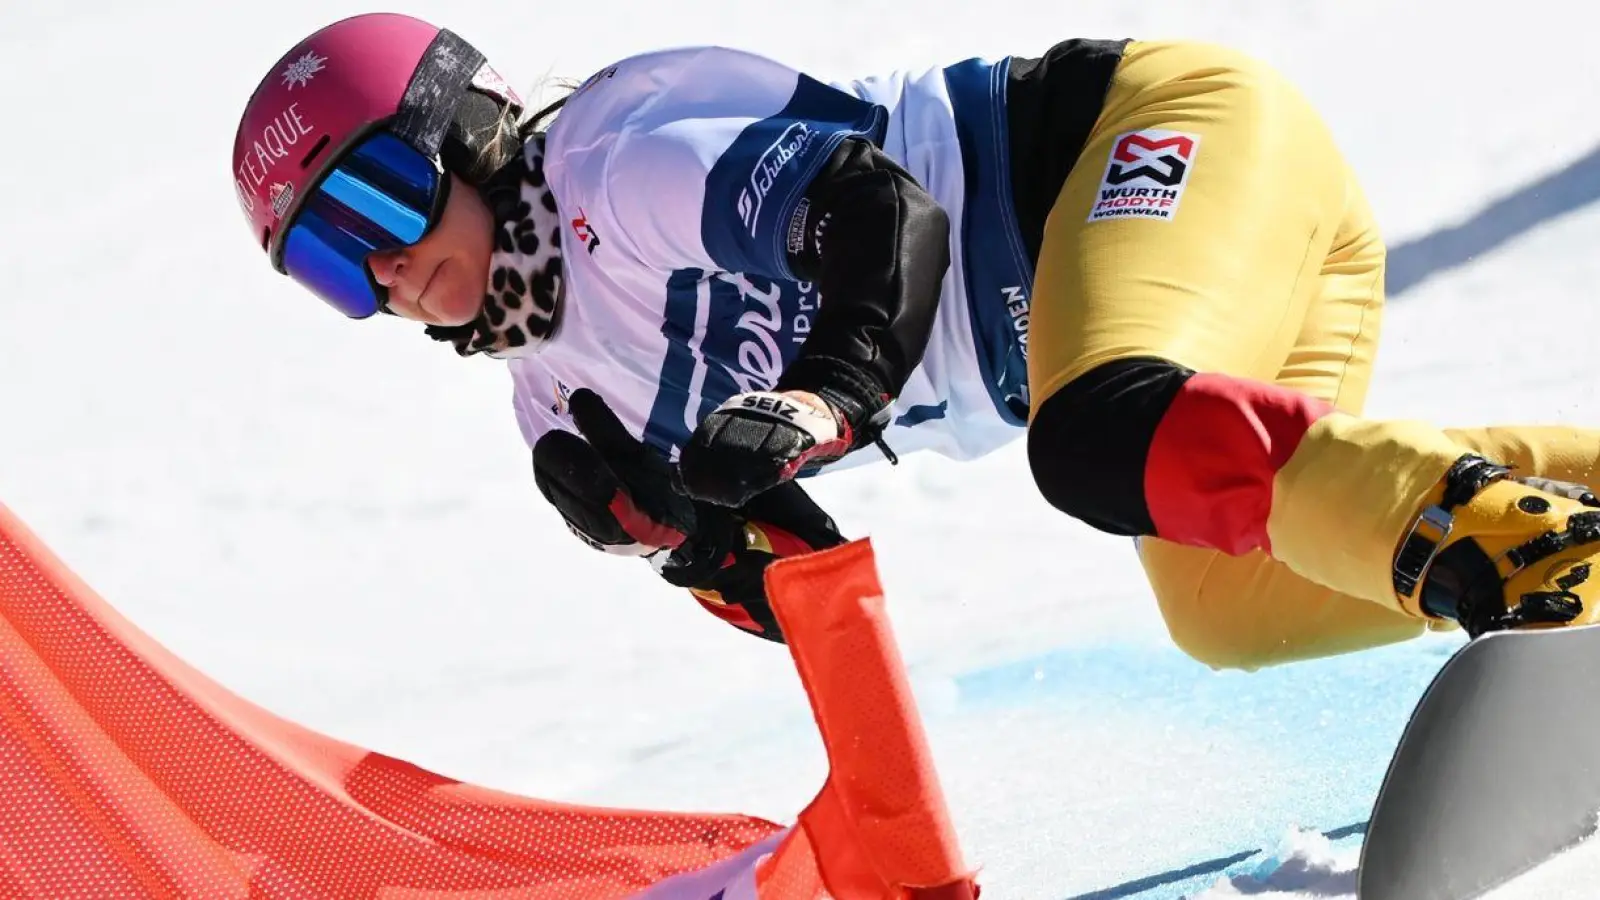 Snowboard: Weltcup, Finale Parallel-Slalom, Damen. Ramona Hofmeister aus Deutschland startet im 1/8 Finale. (Foto: Angelika Warmuth/dpa)